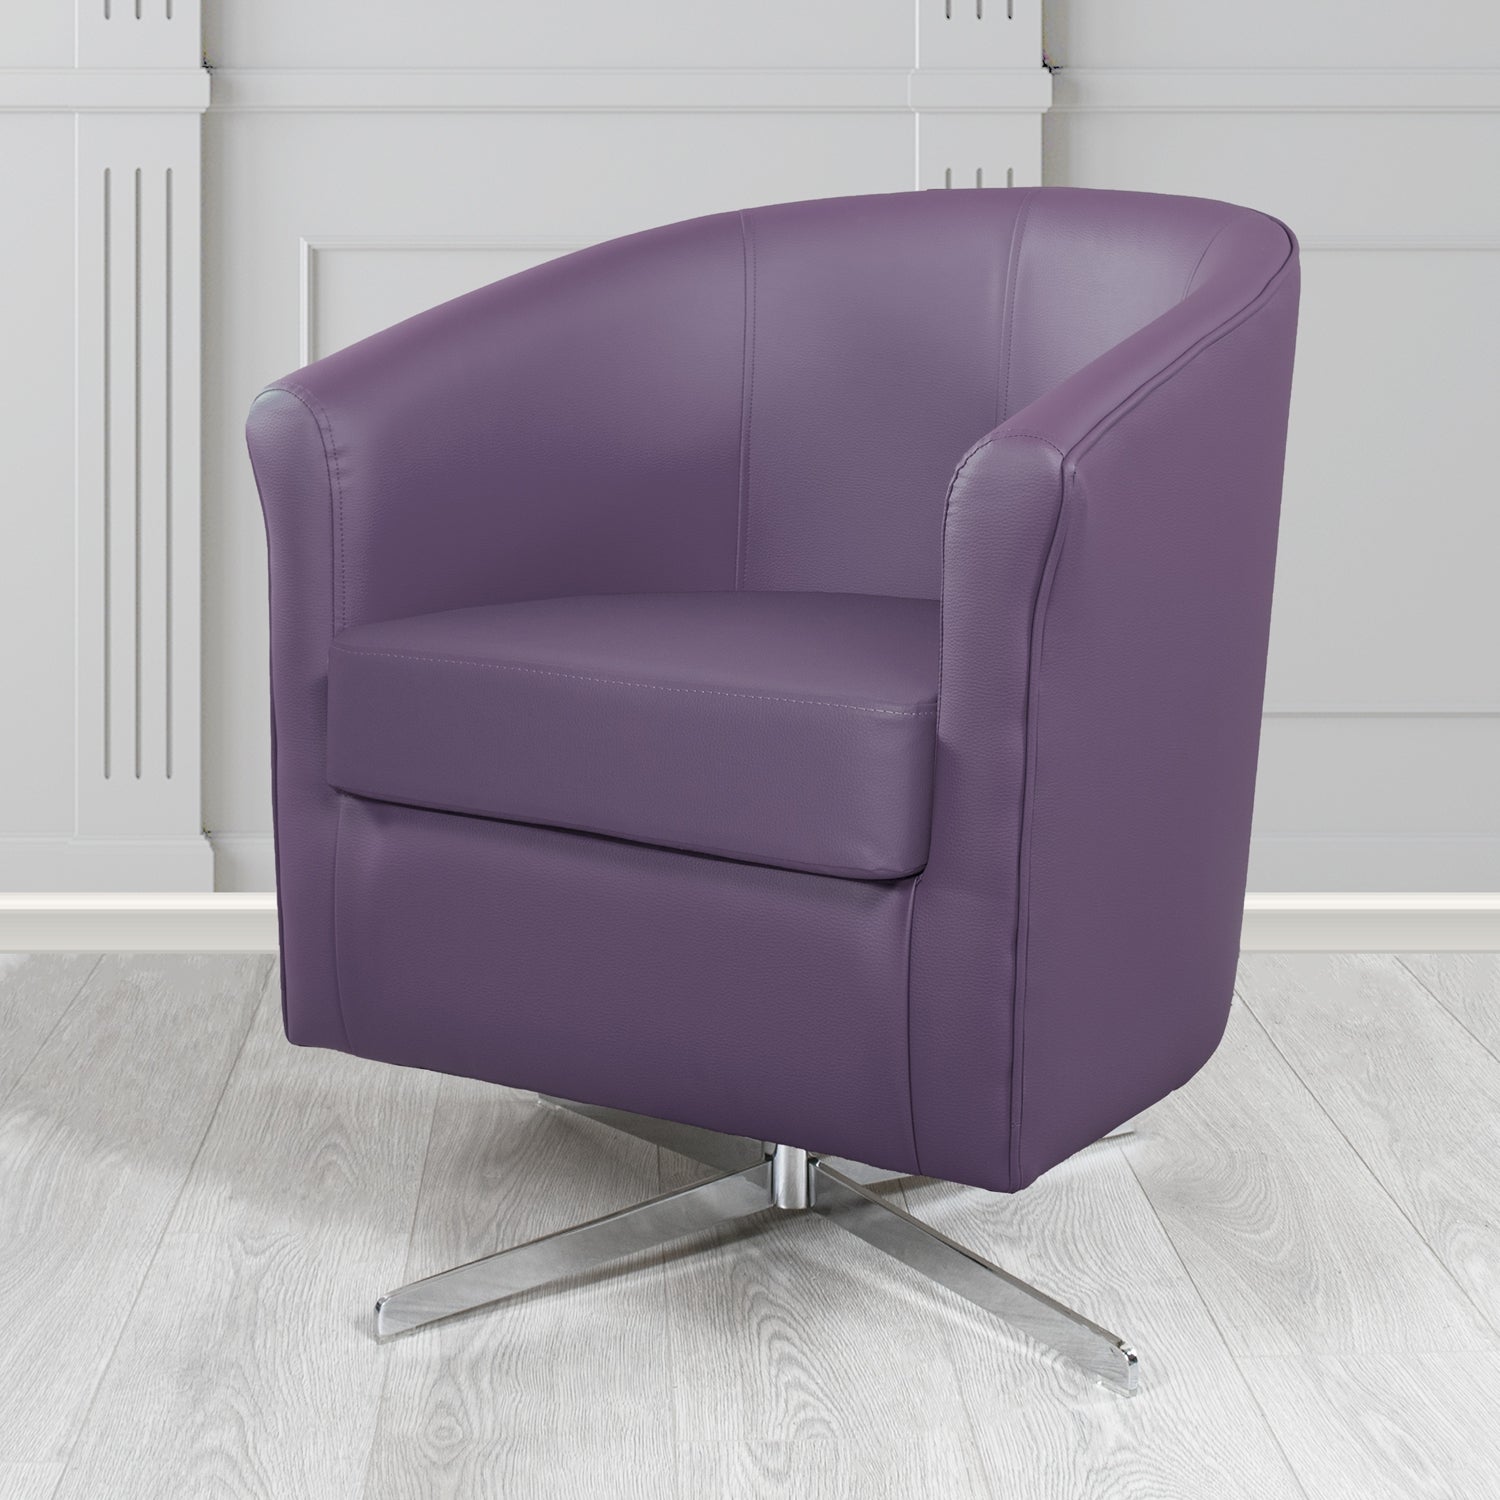 Cannes Swivel Tub Chair in Just Colour Professor Plum Crib 5 Faux Leather - The Tub Chair Shop